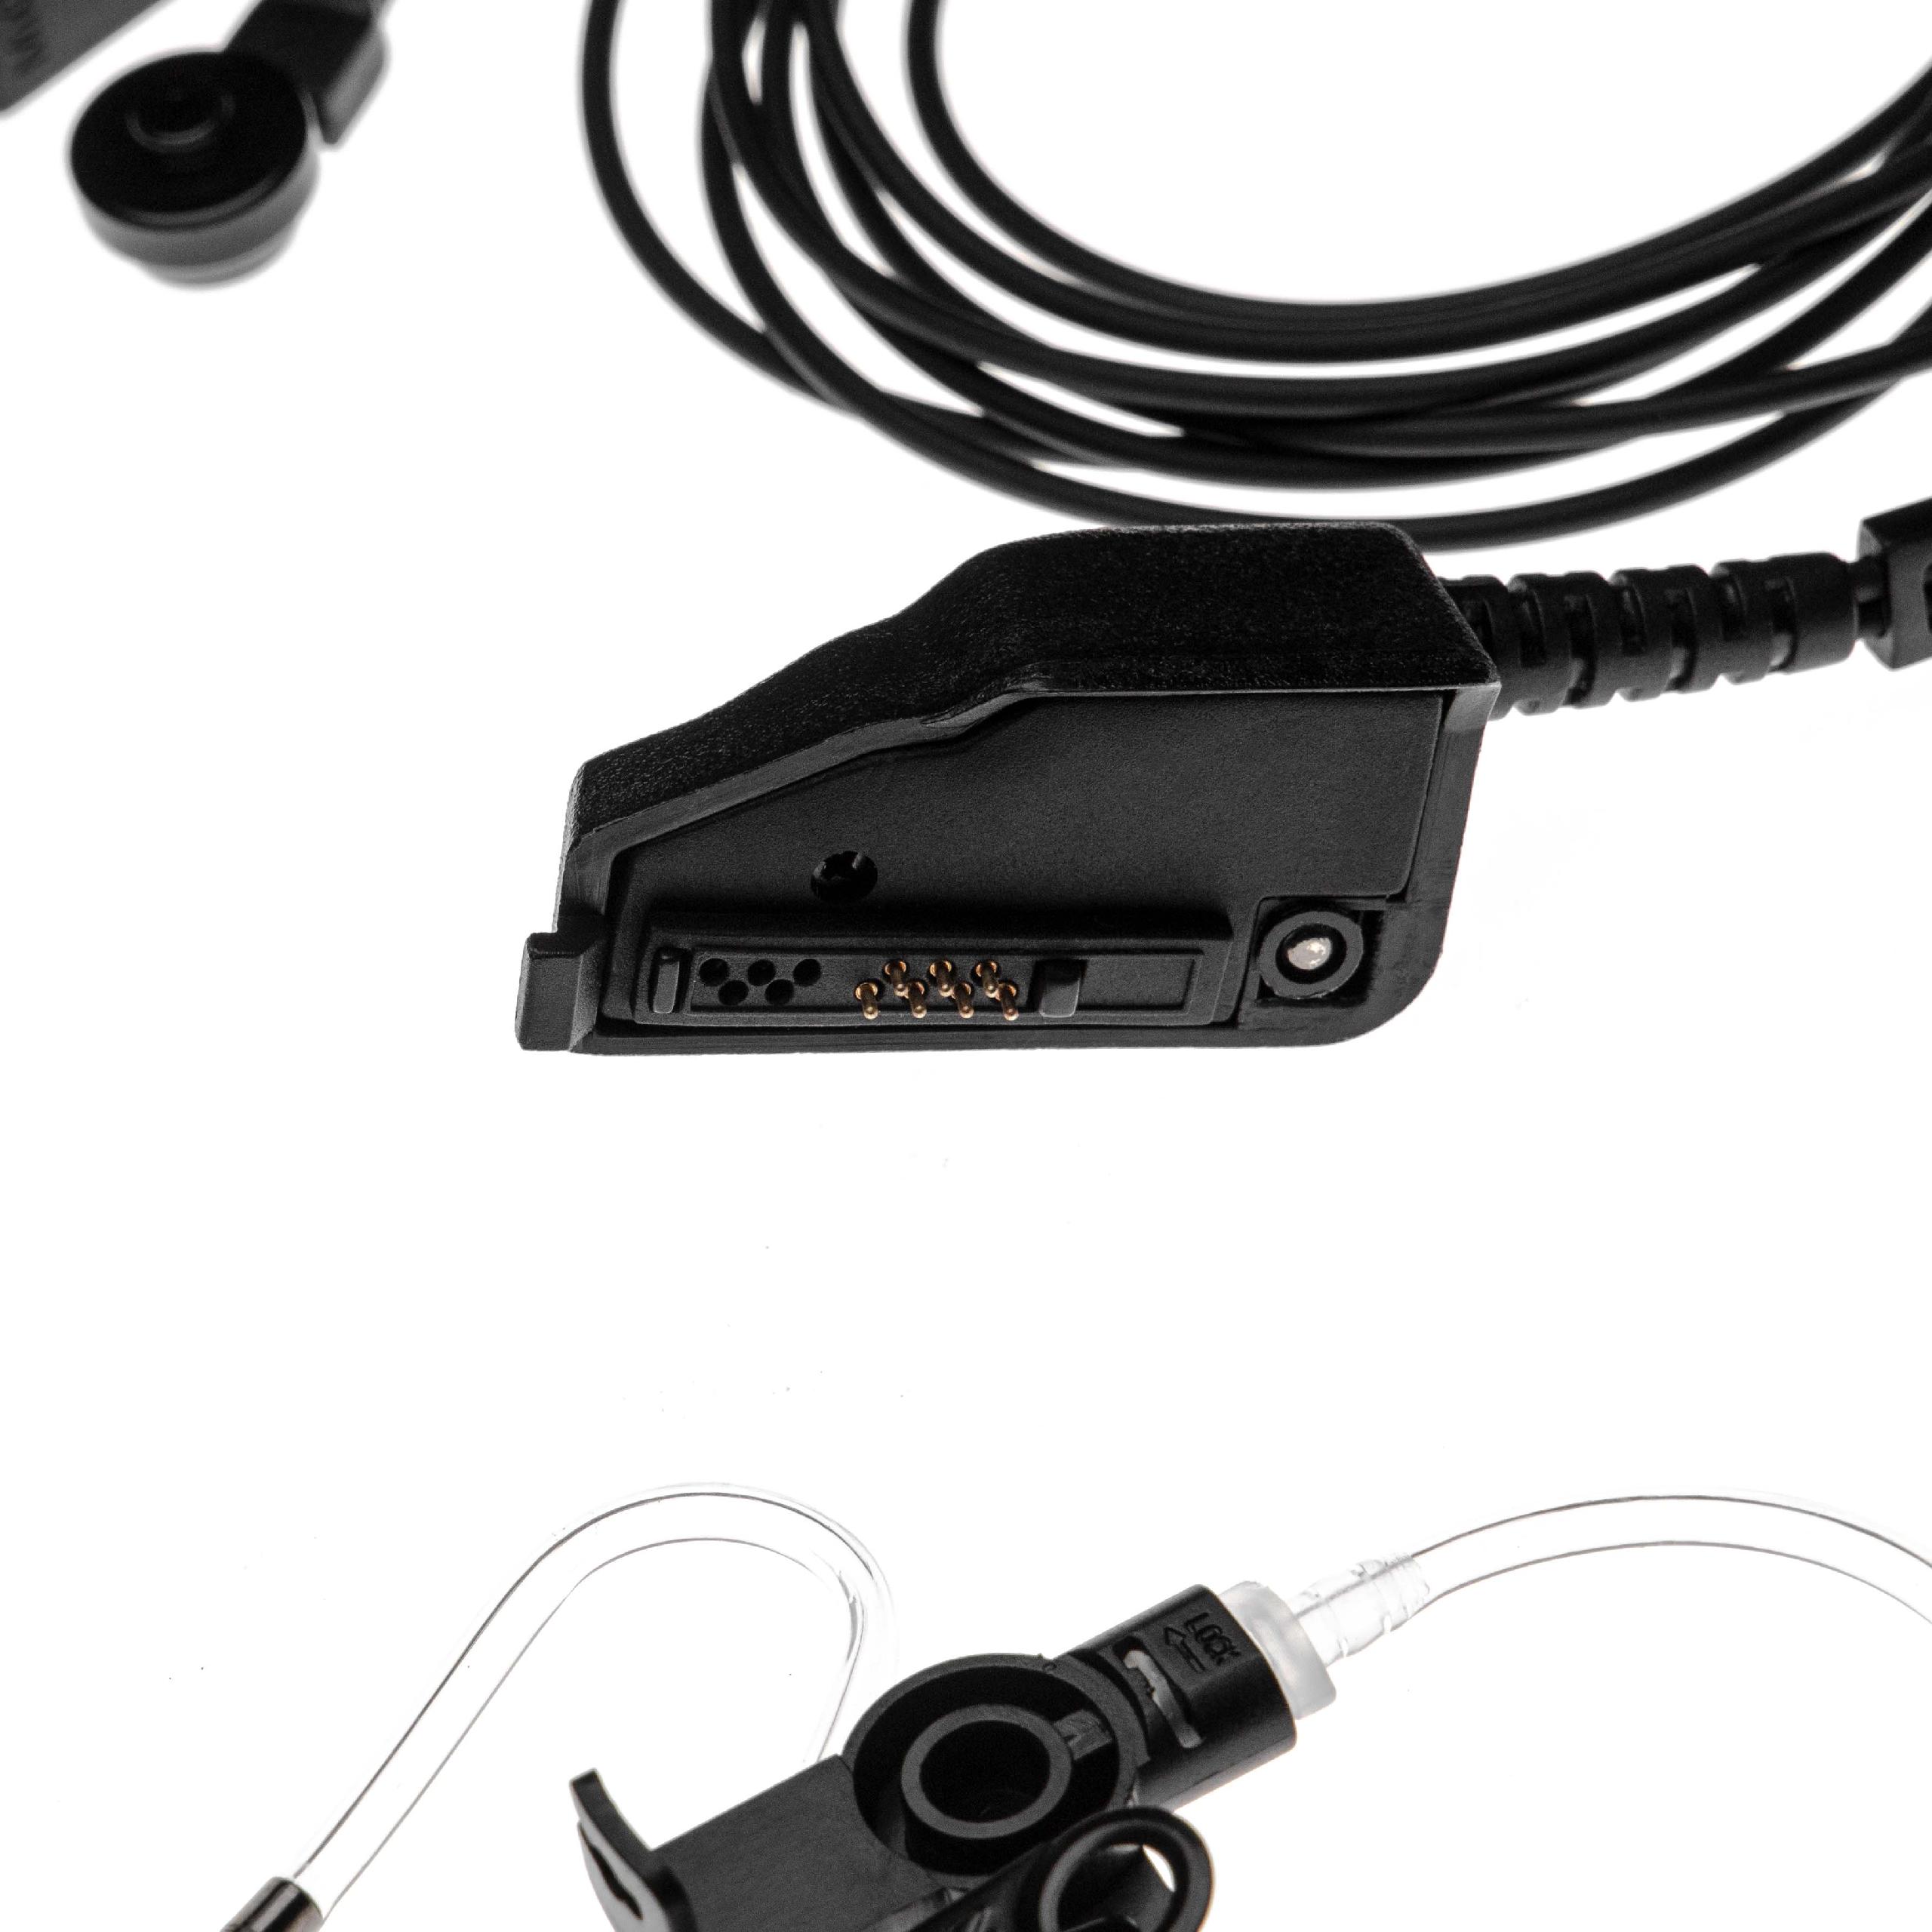 Security headset per ricetrasmittente Kenwood TK-2140E - trasparente / nero + microfono push-to-talk + support